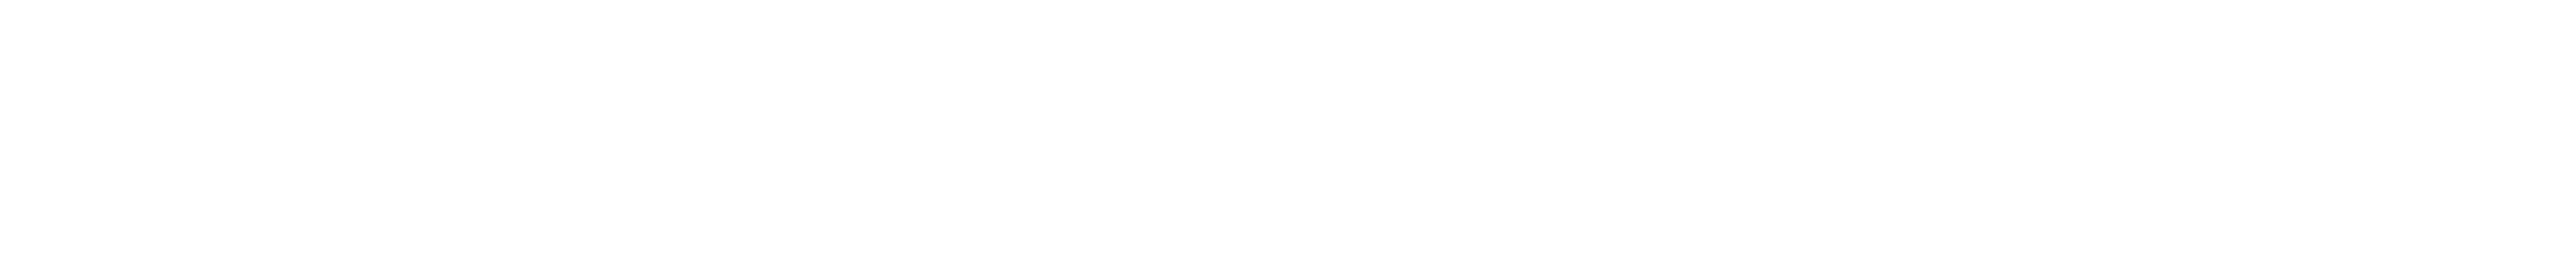 organic cotto_logo_Tavola disegno 1.png